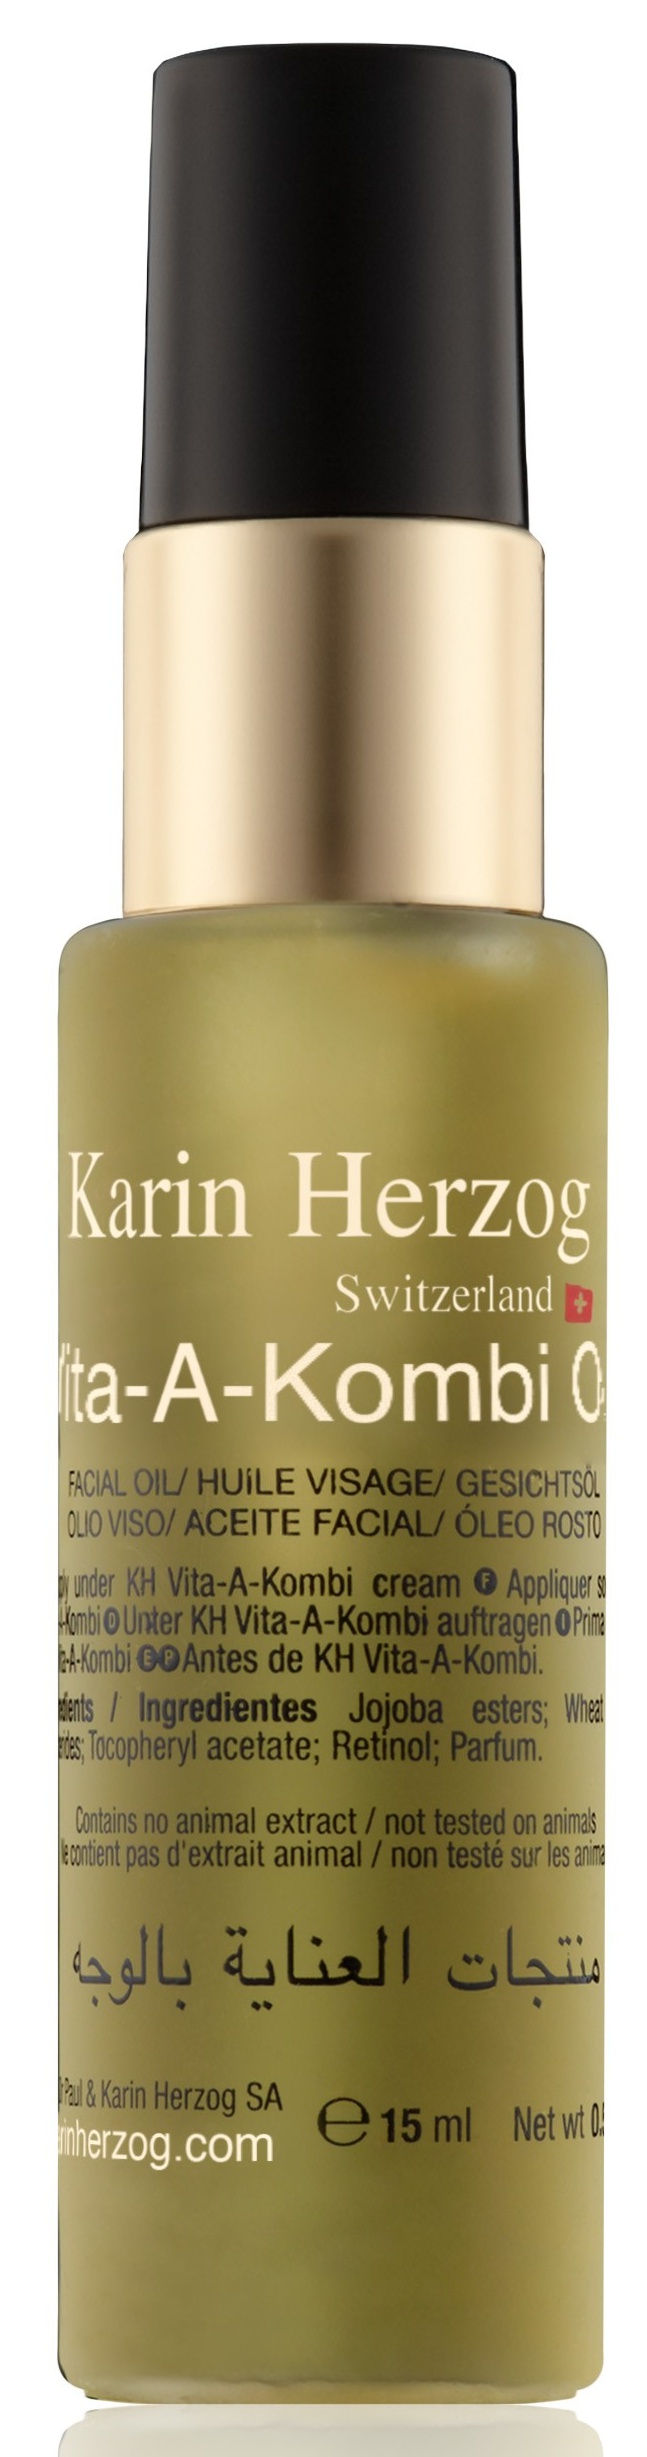 Karin Herzog Vita-A-Kombi Oil